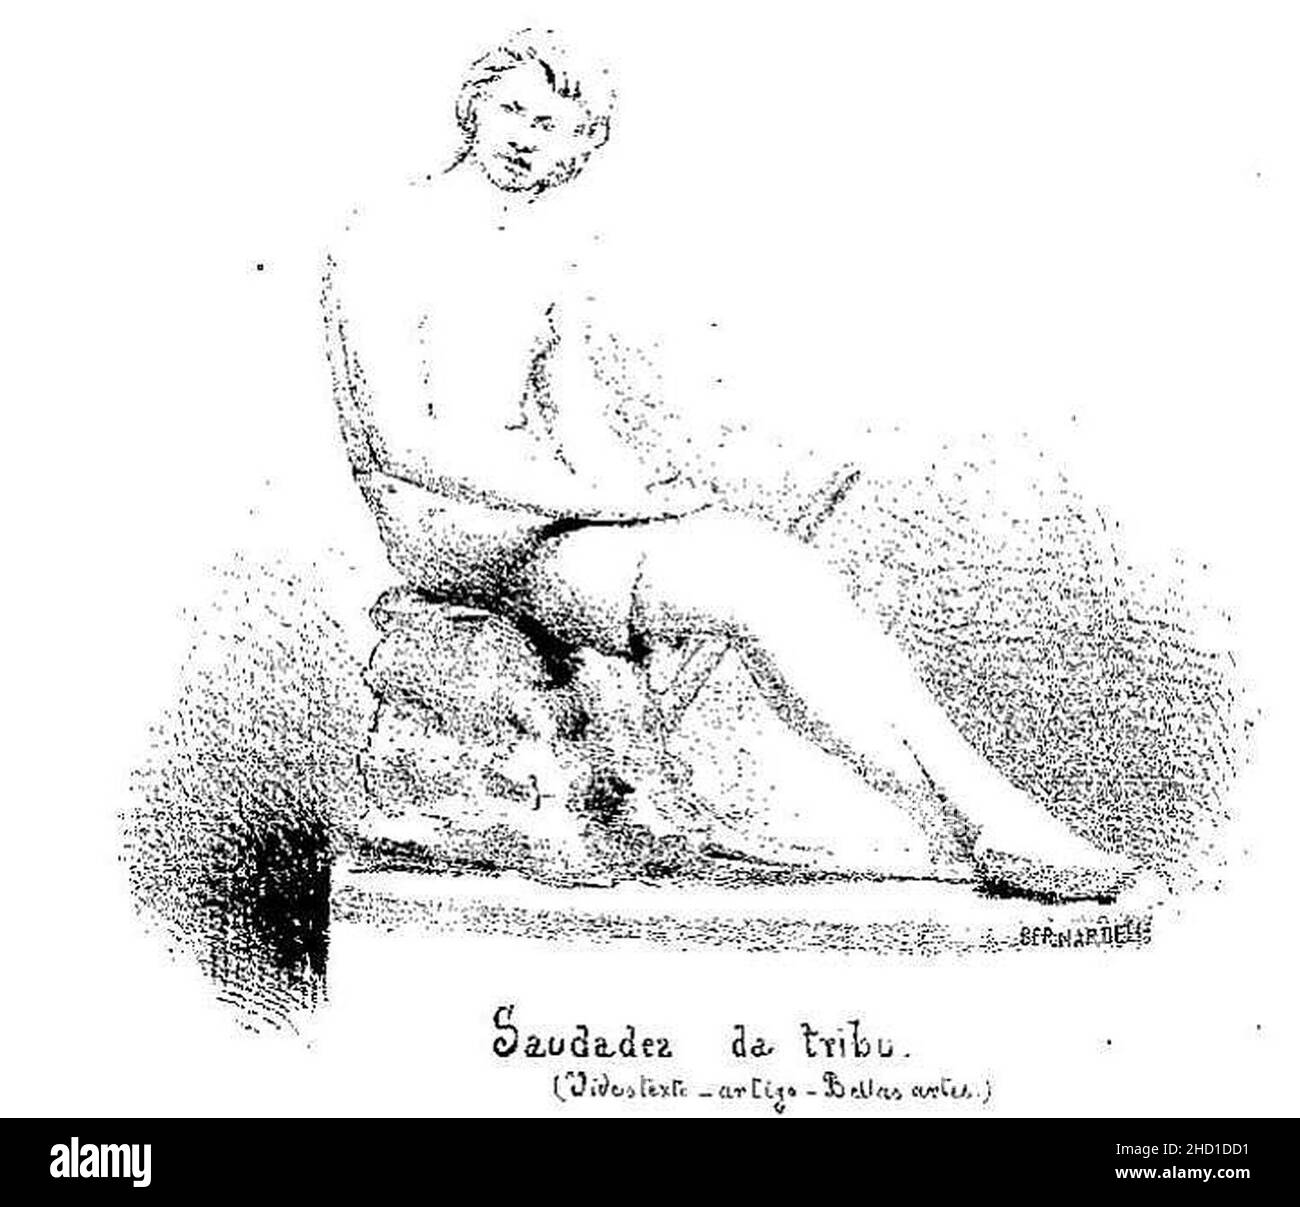 Rodolfo Bernardelli - Saudades da Tribo, 1875. Stock Photo